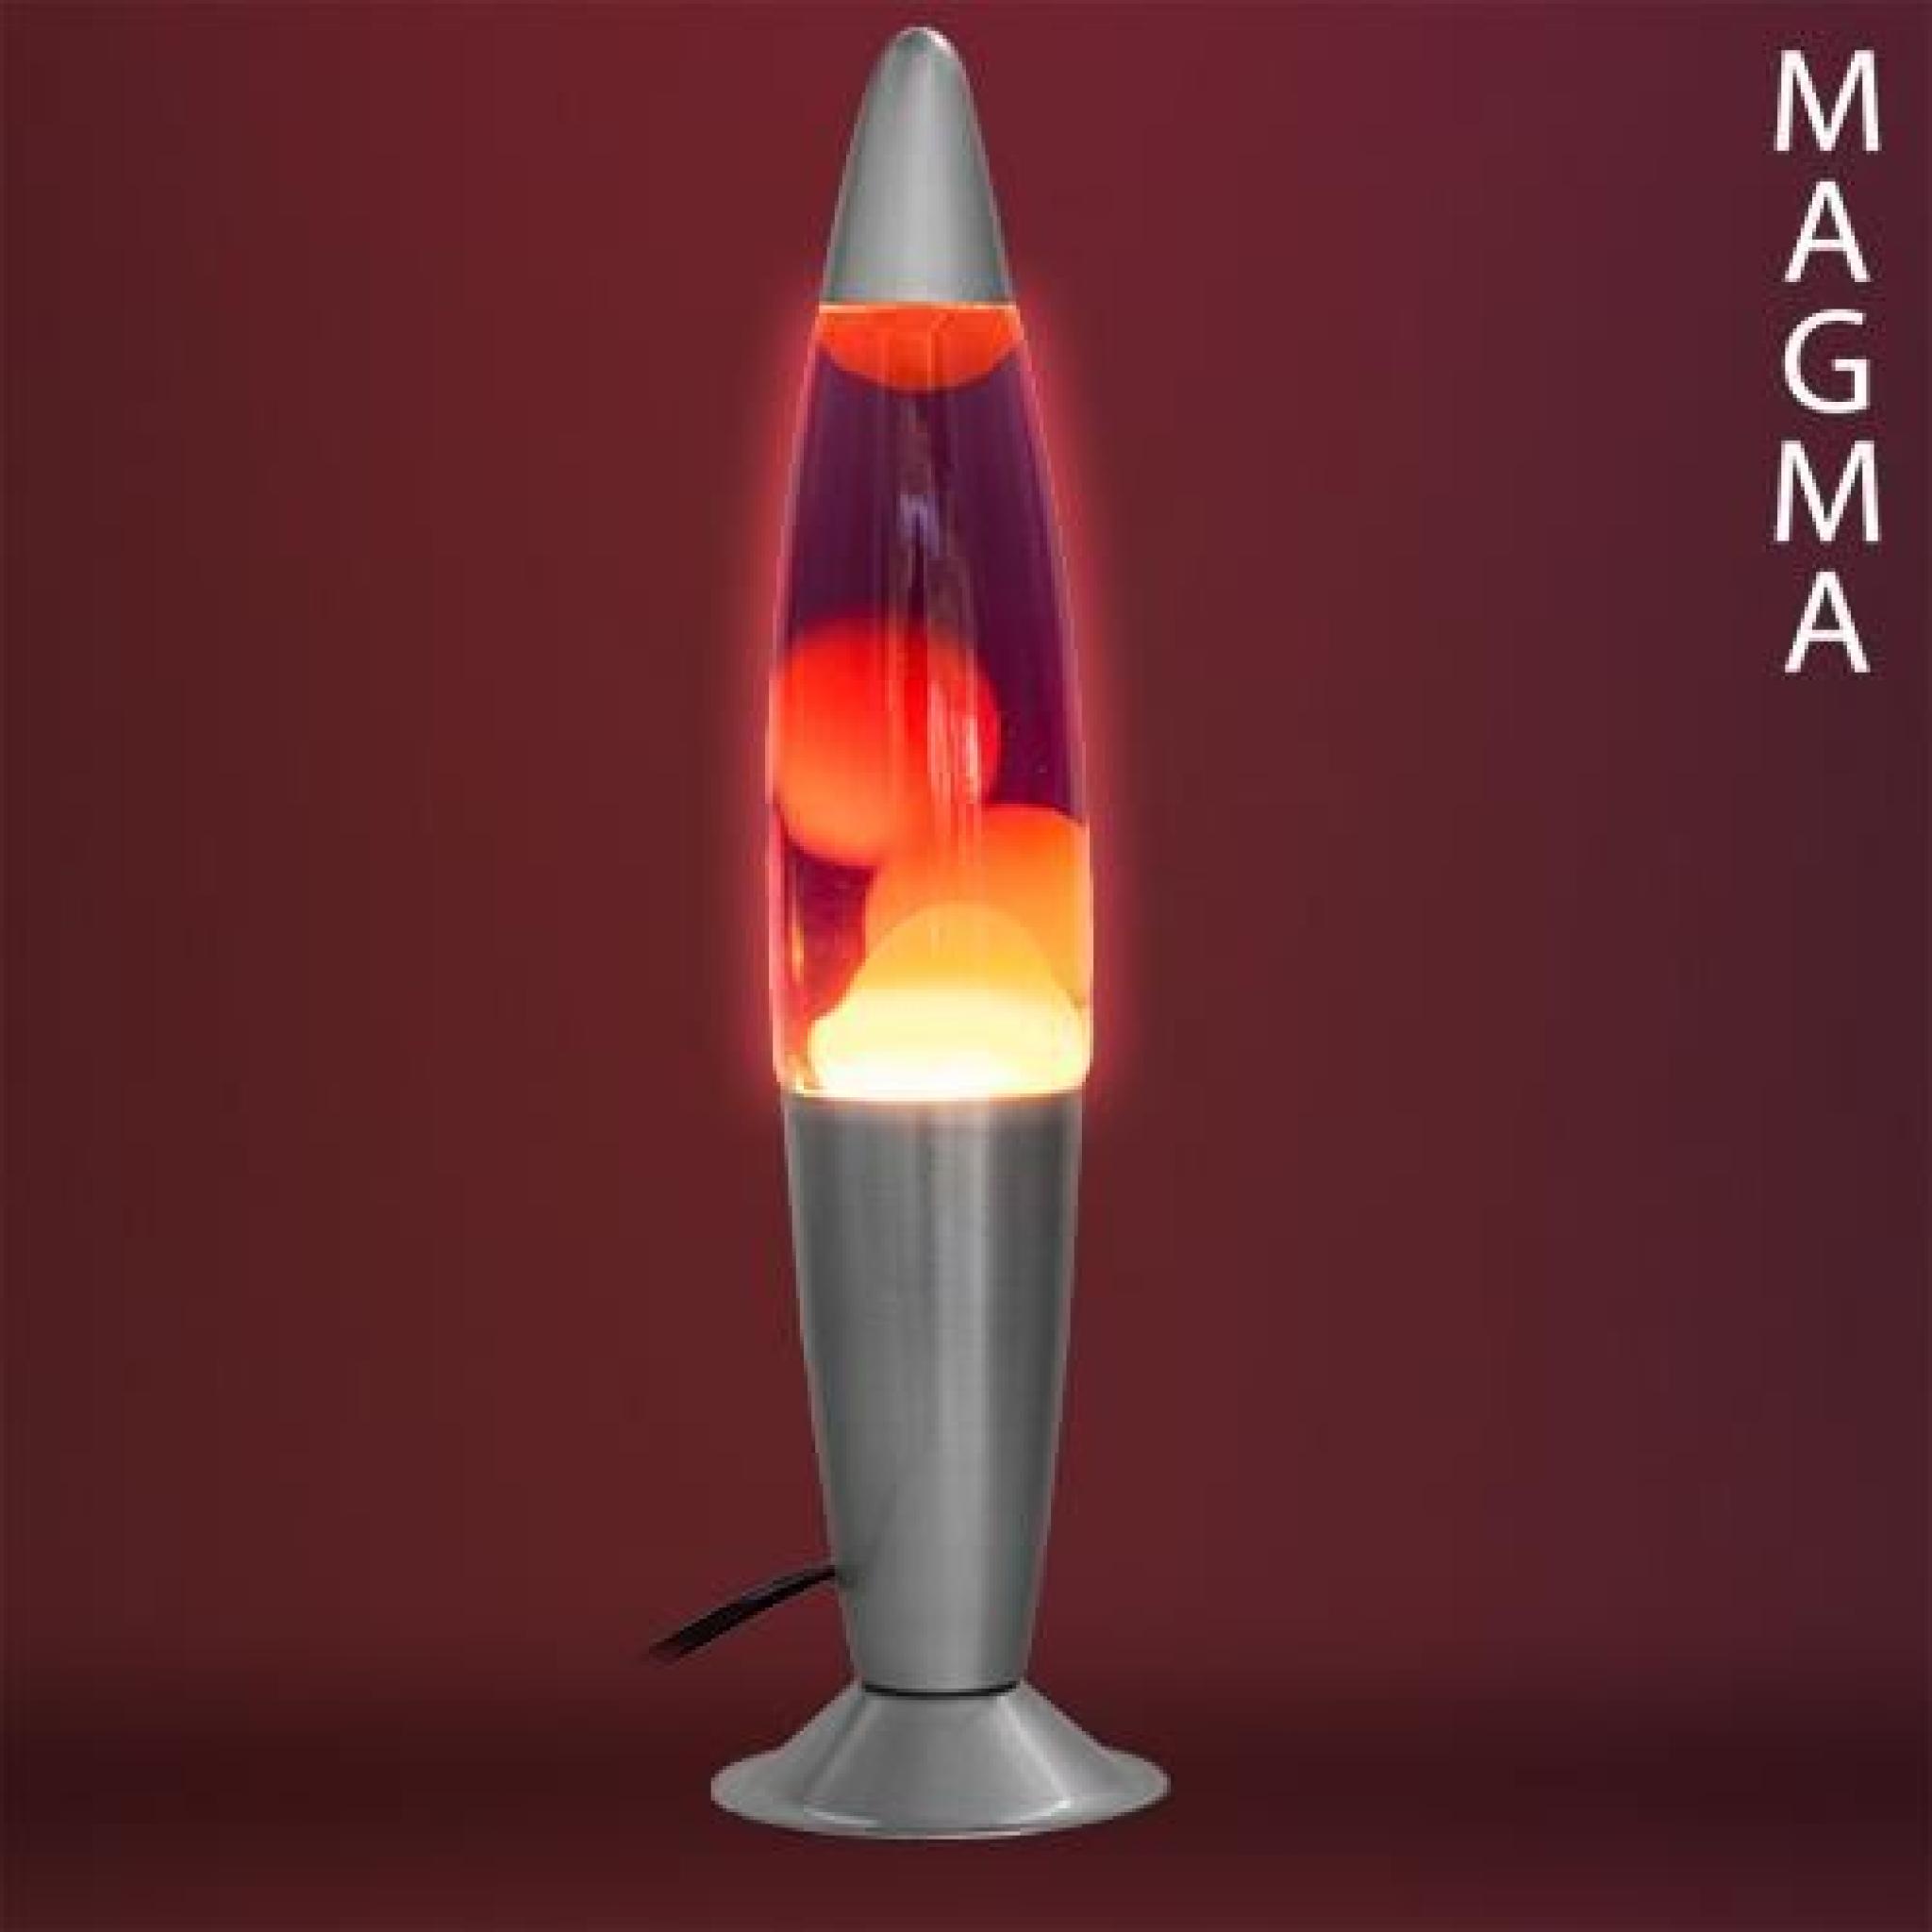 Lampe à Lave Magma Rose pas cher